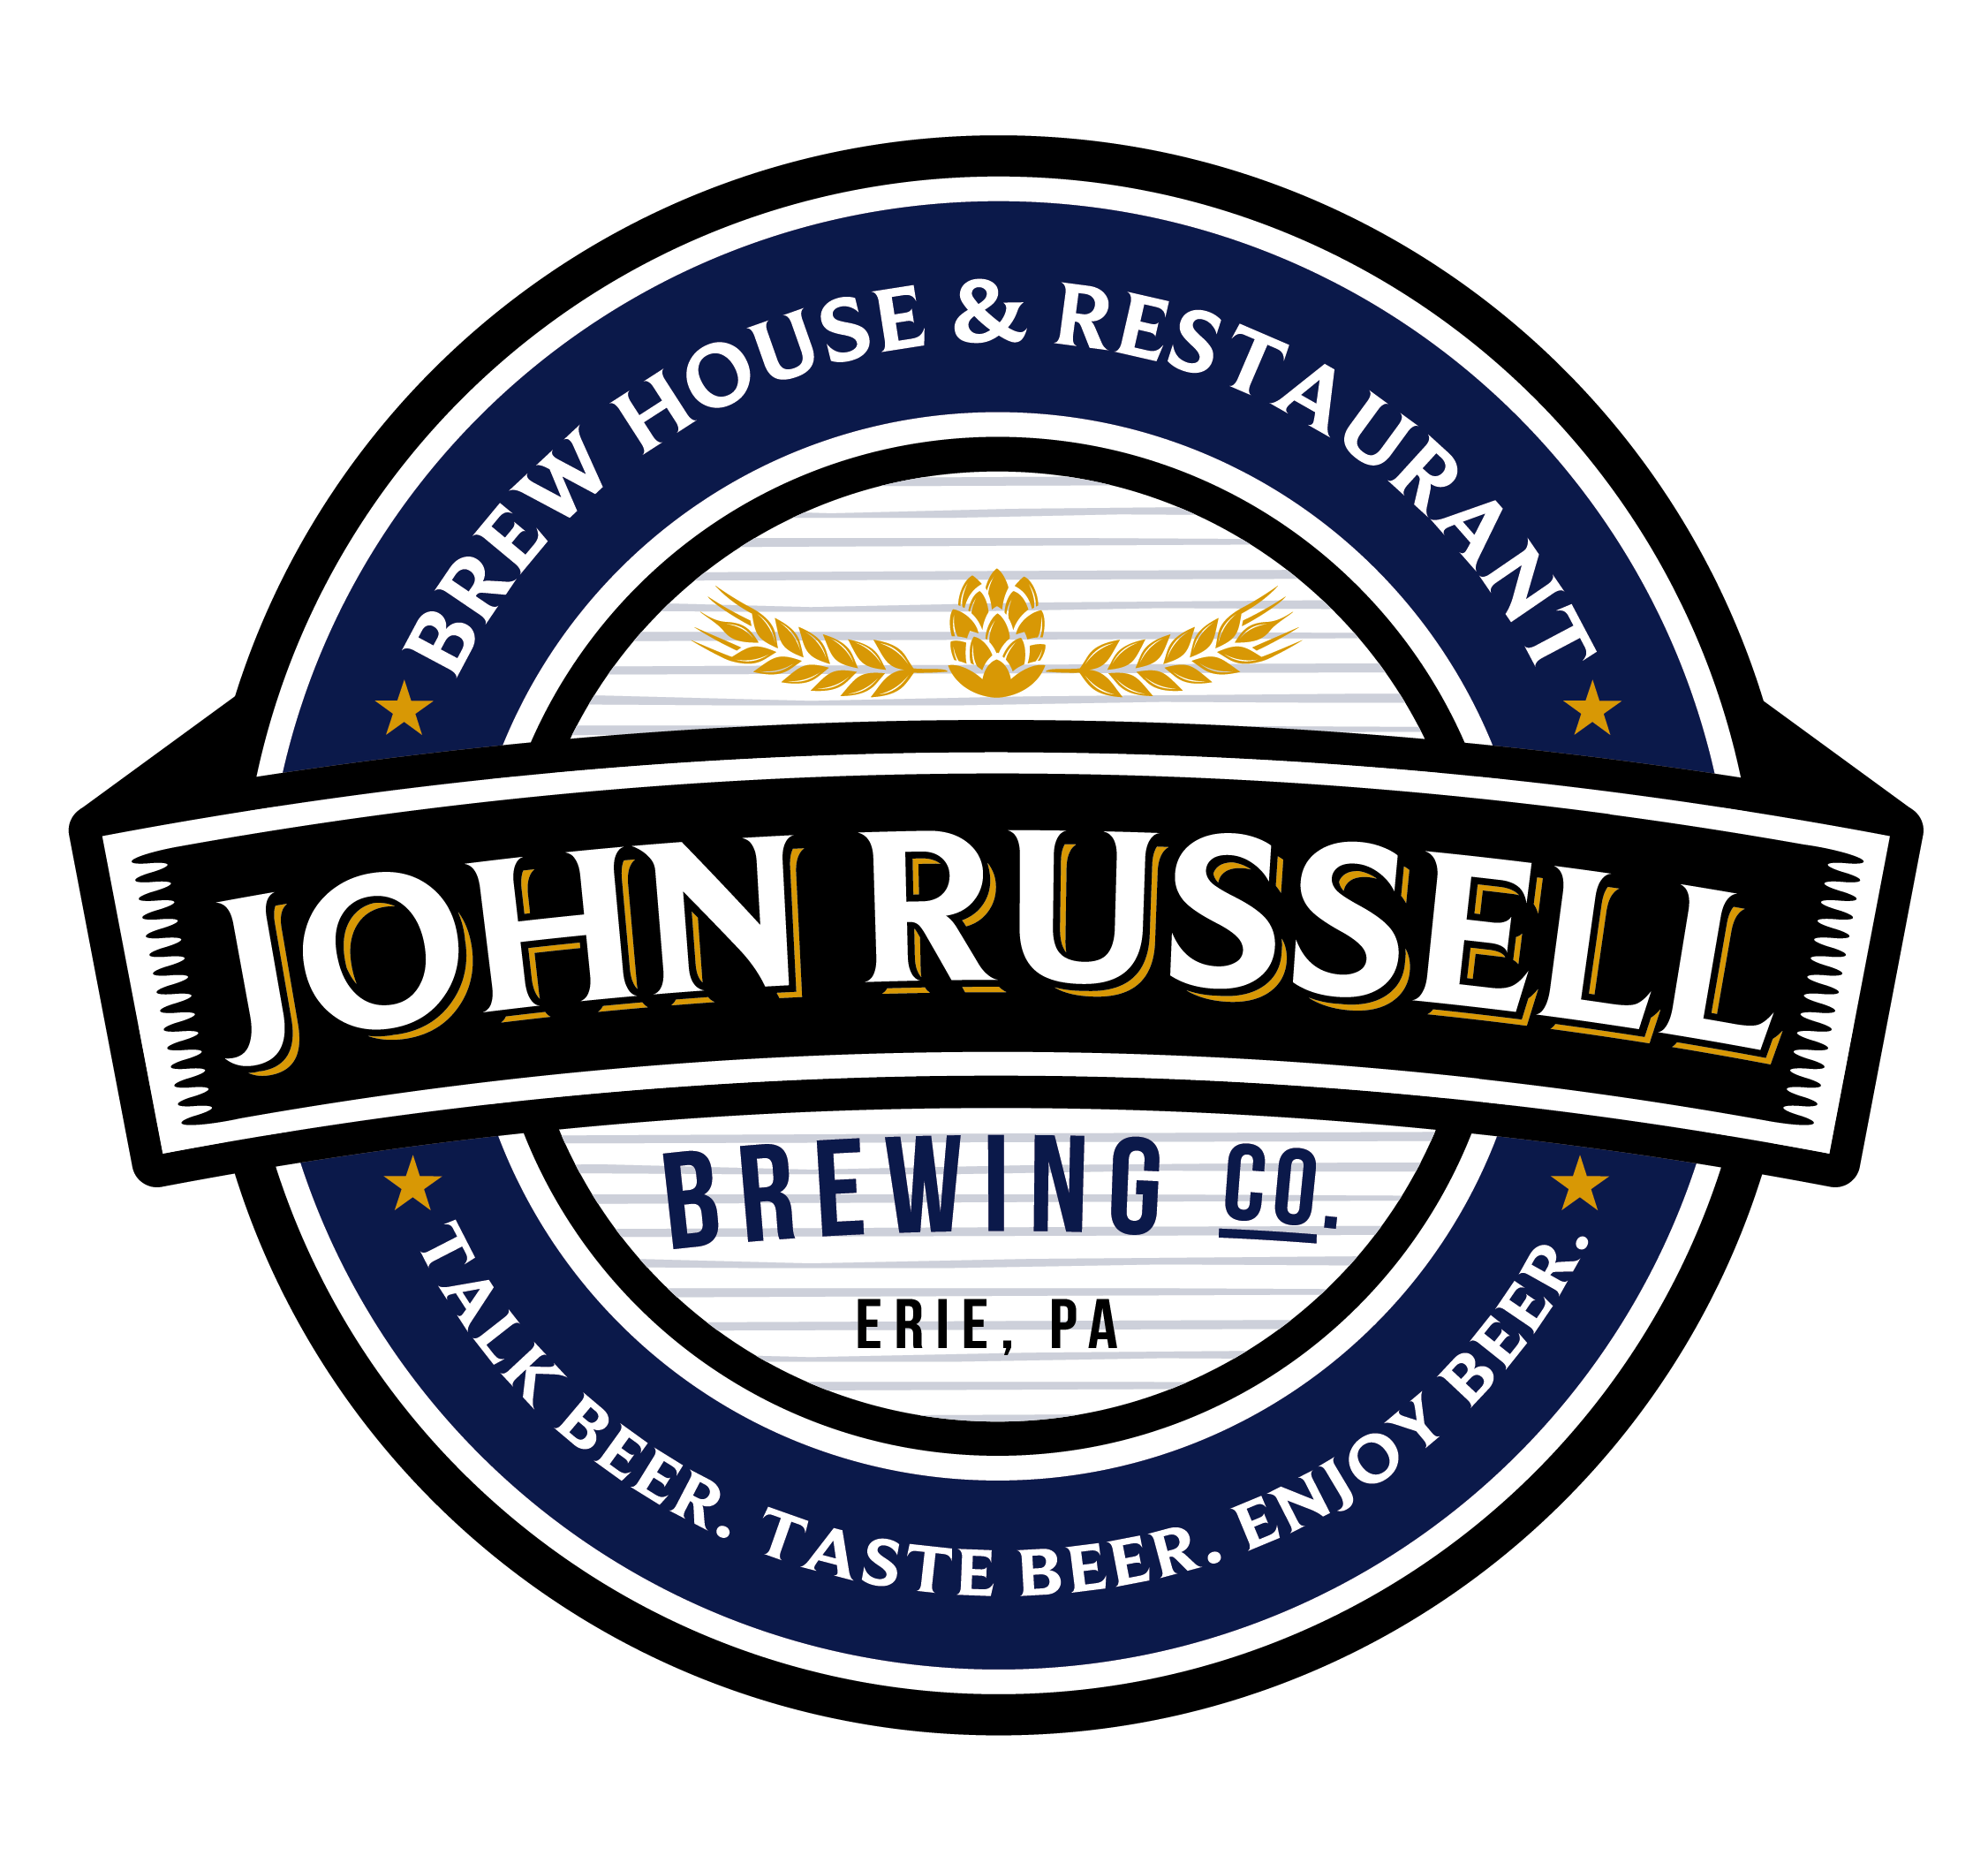 John Russell Brewing Co Brew House Restaurant logo final padding